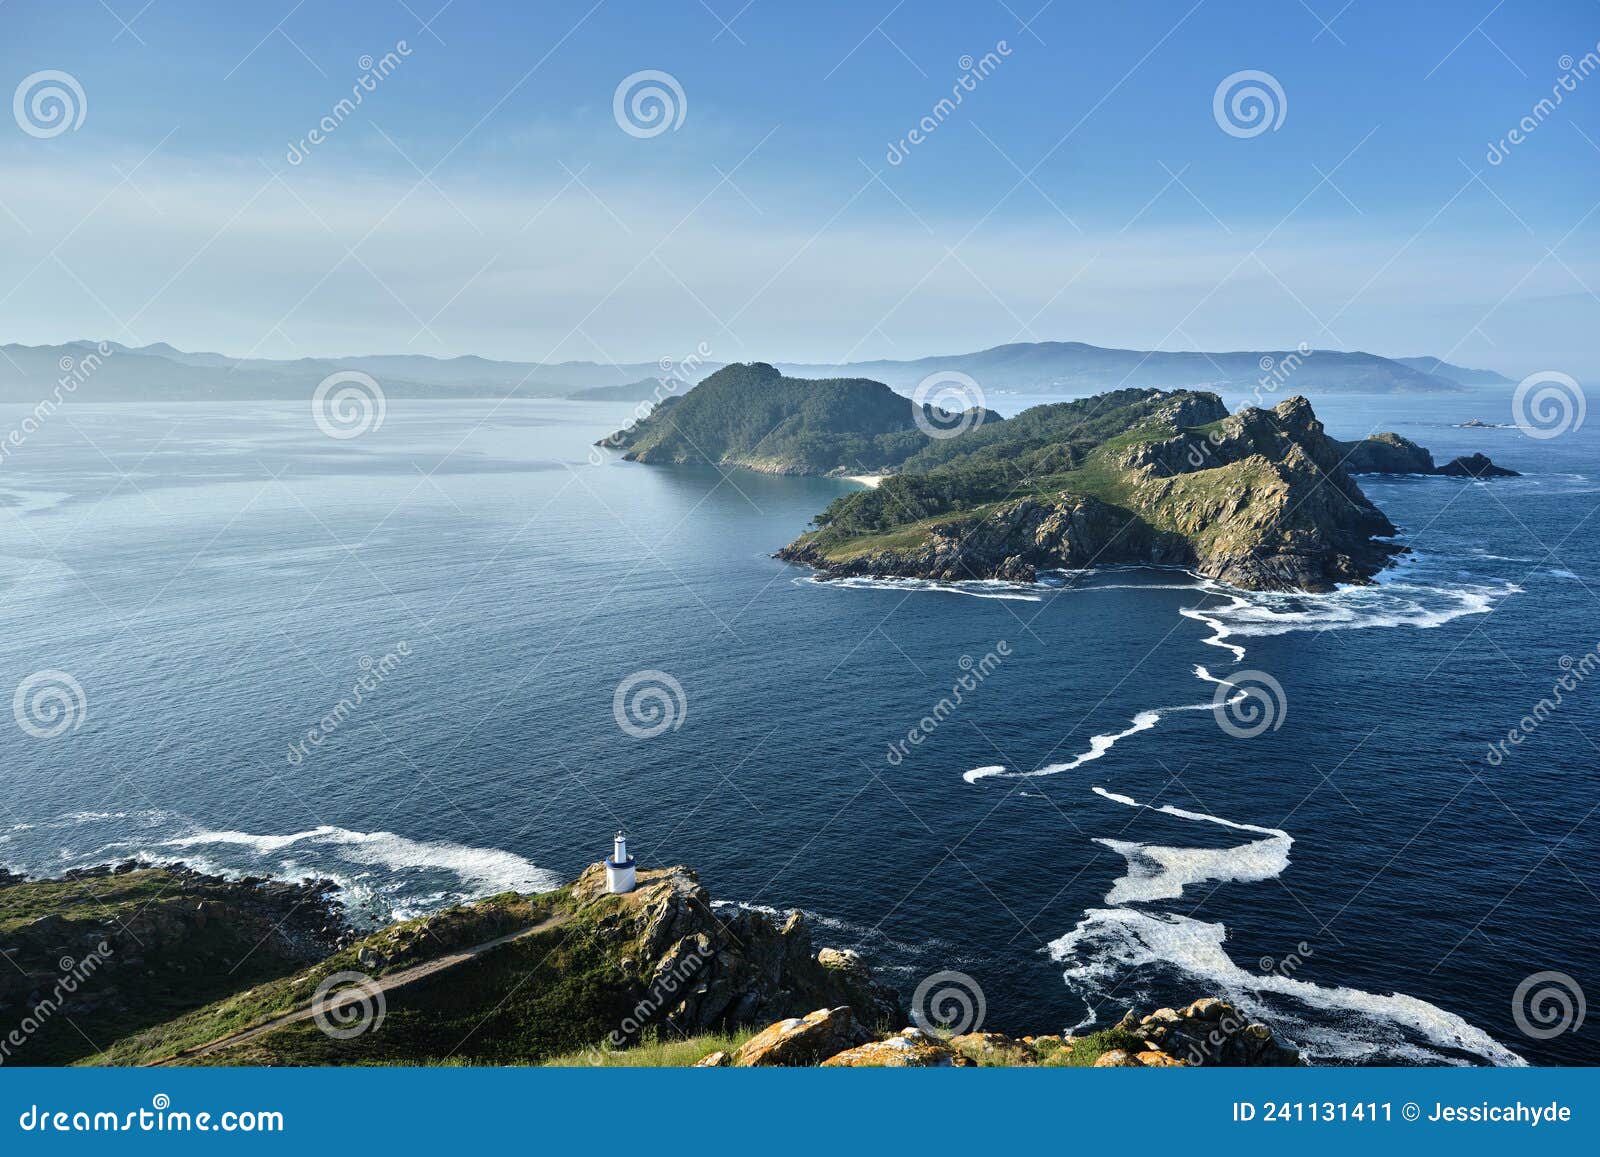 cies islands, atlantic islands of galicia national park